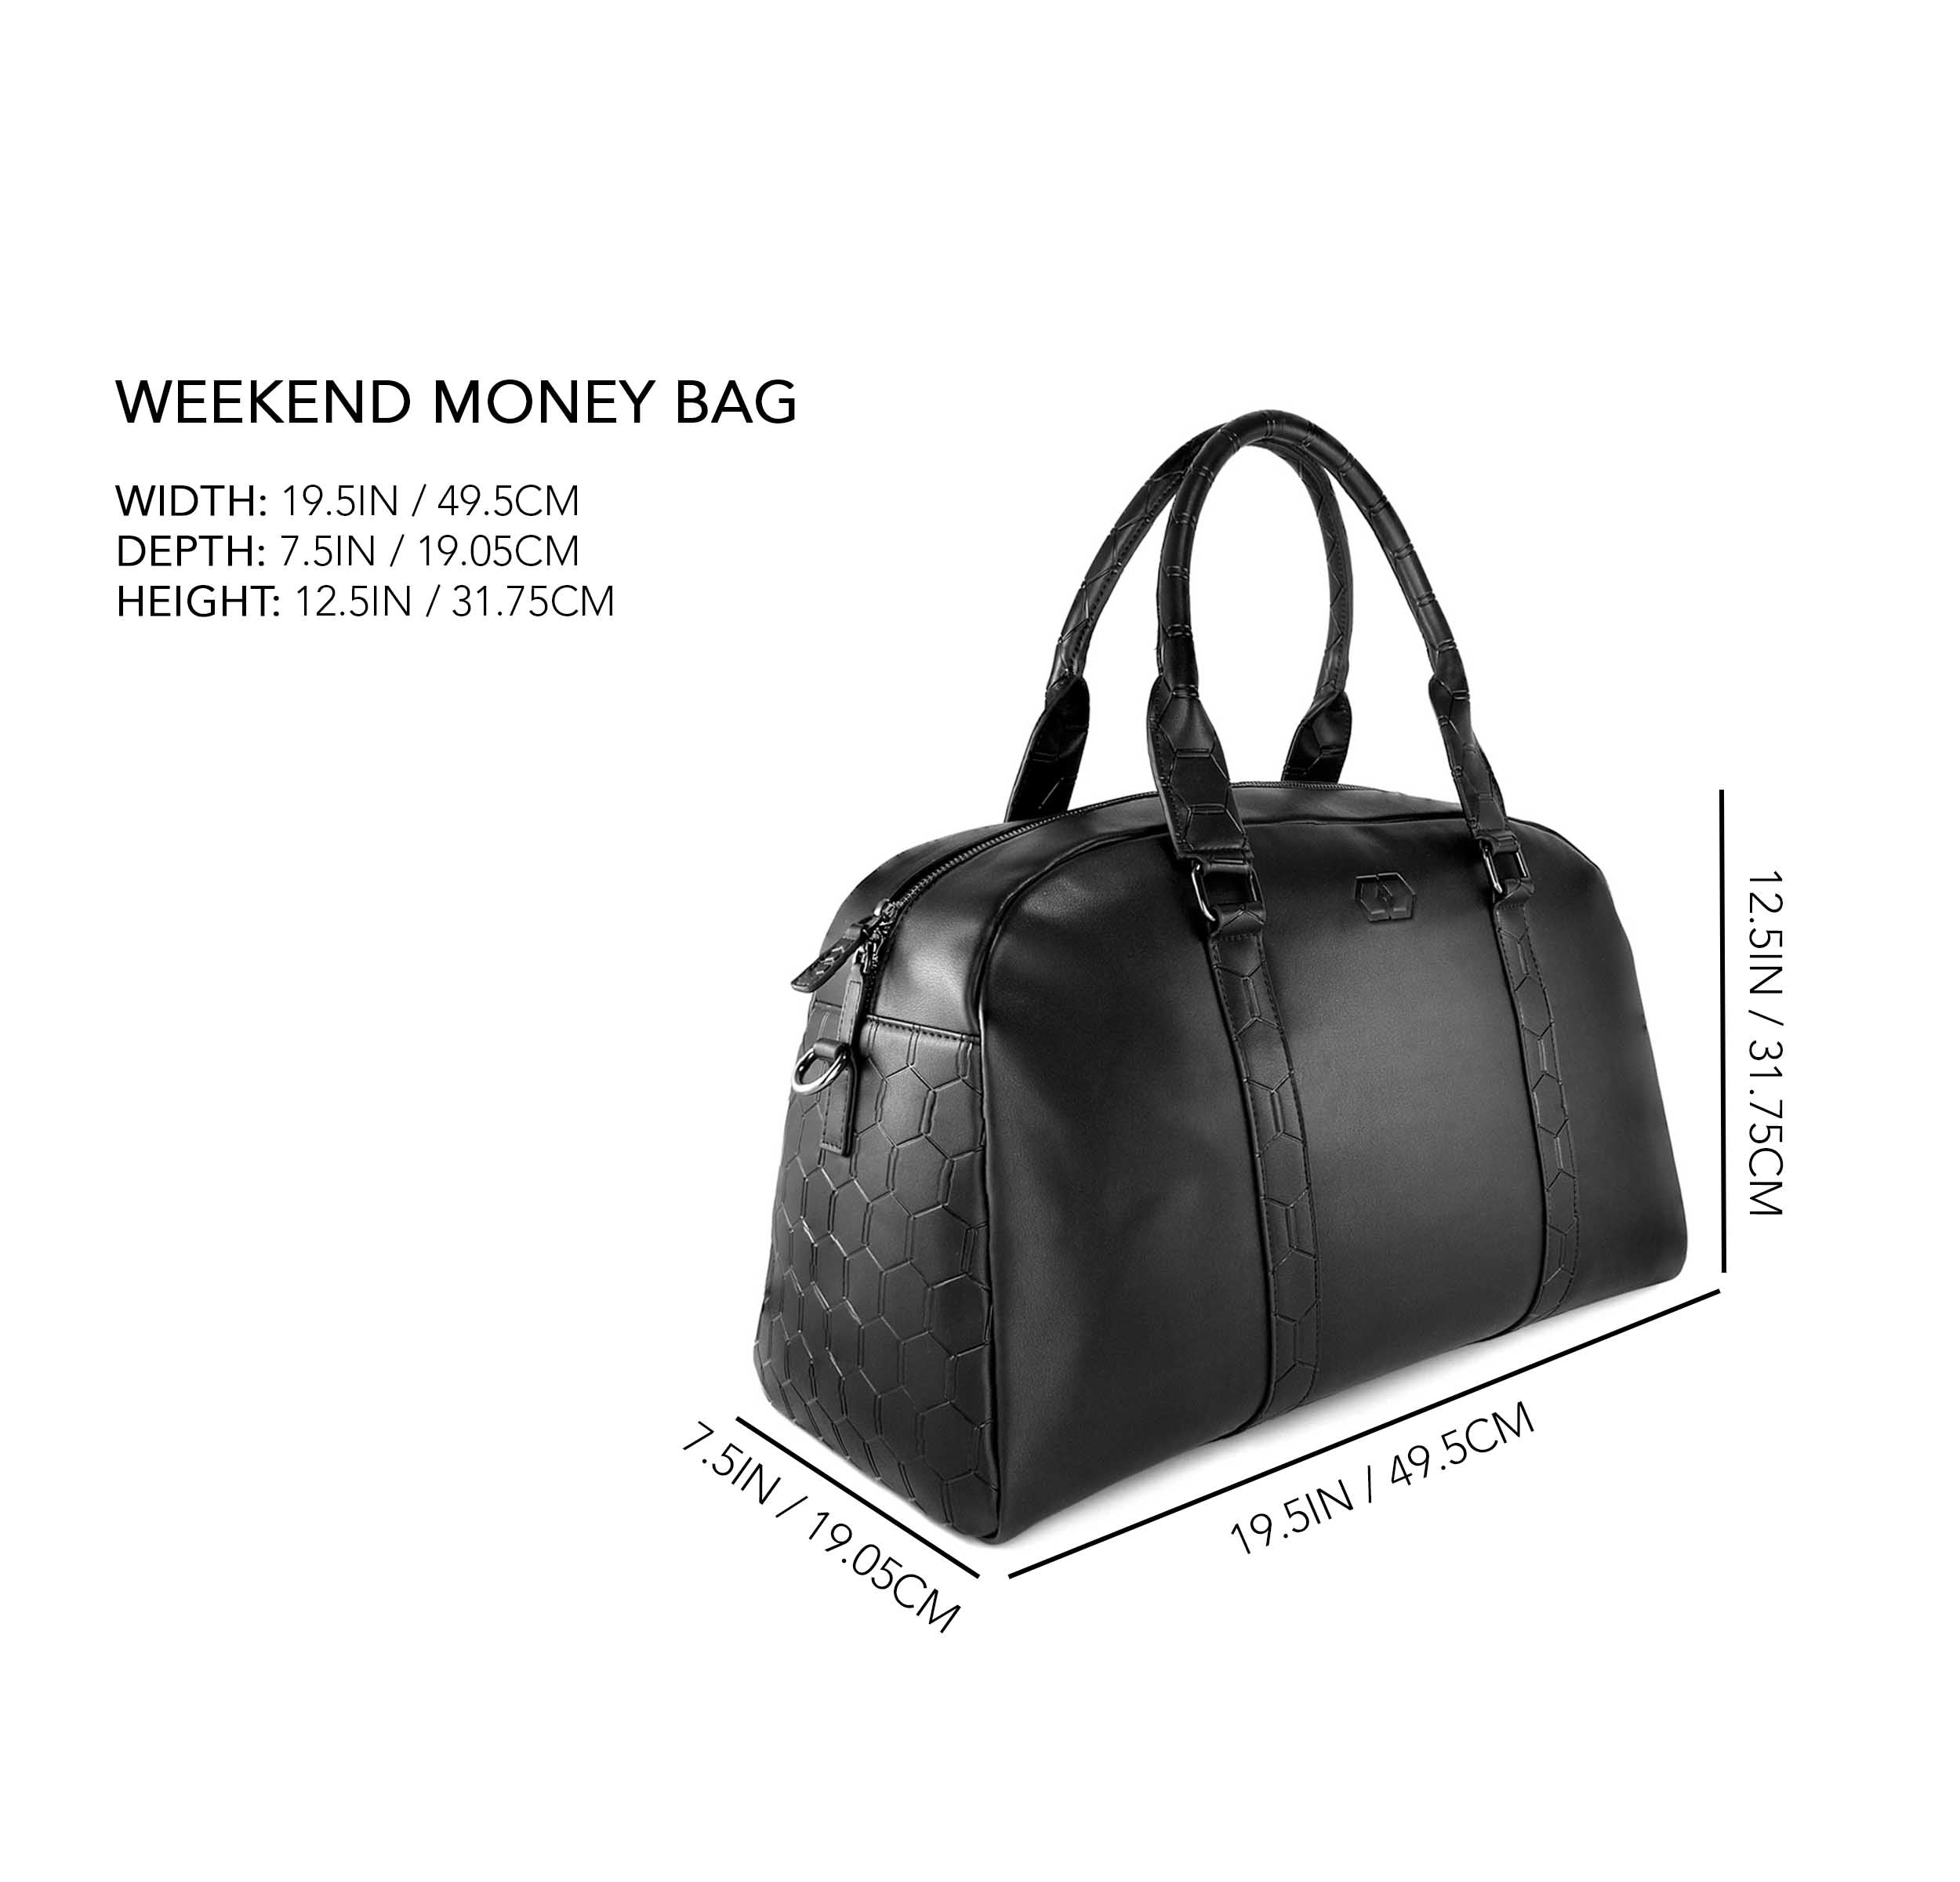 Weekend Money Bag